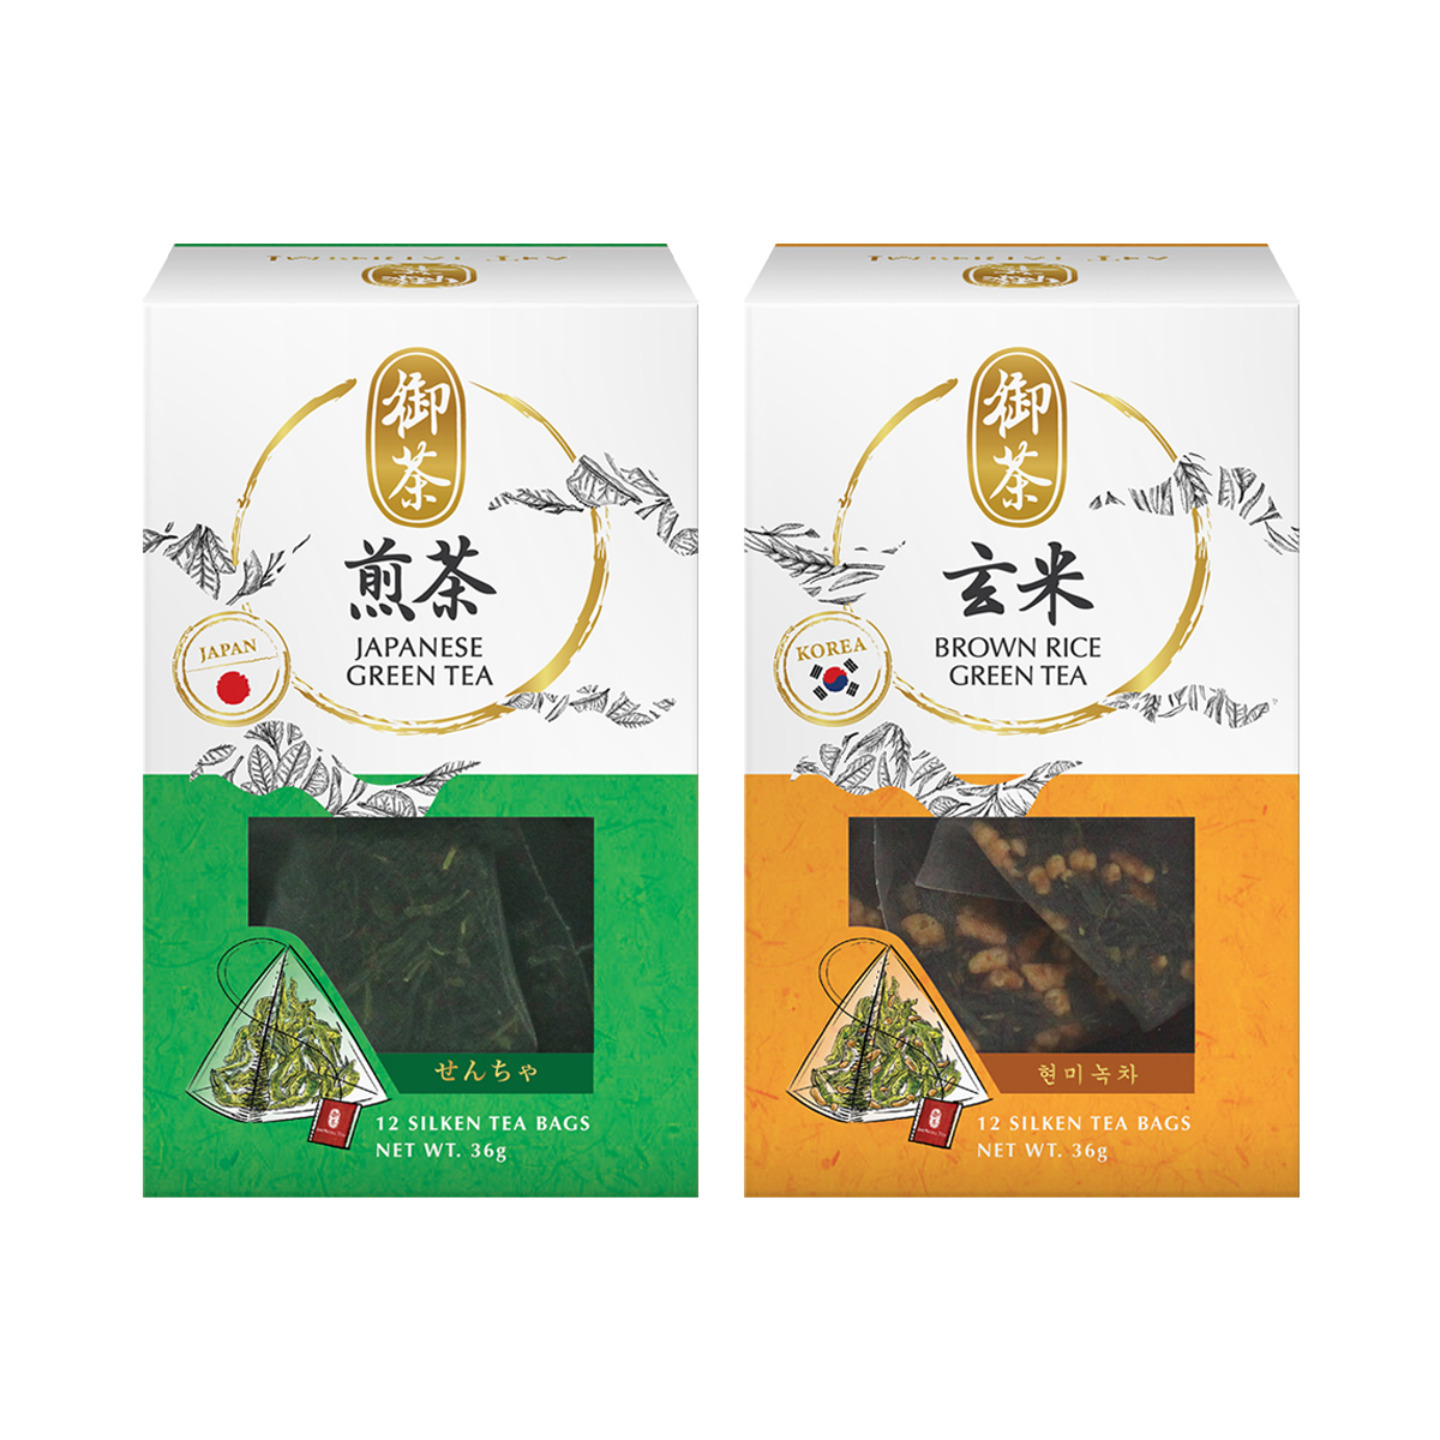 Imperial Japanese Green Tea & Korea Brown Rice Green Tea Bundle of 2